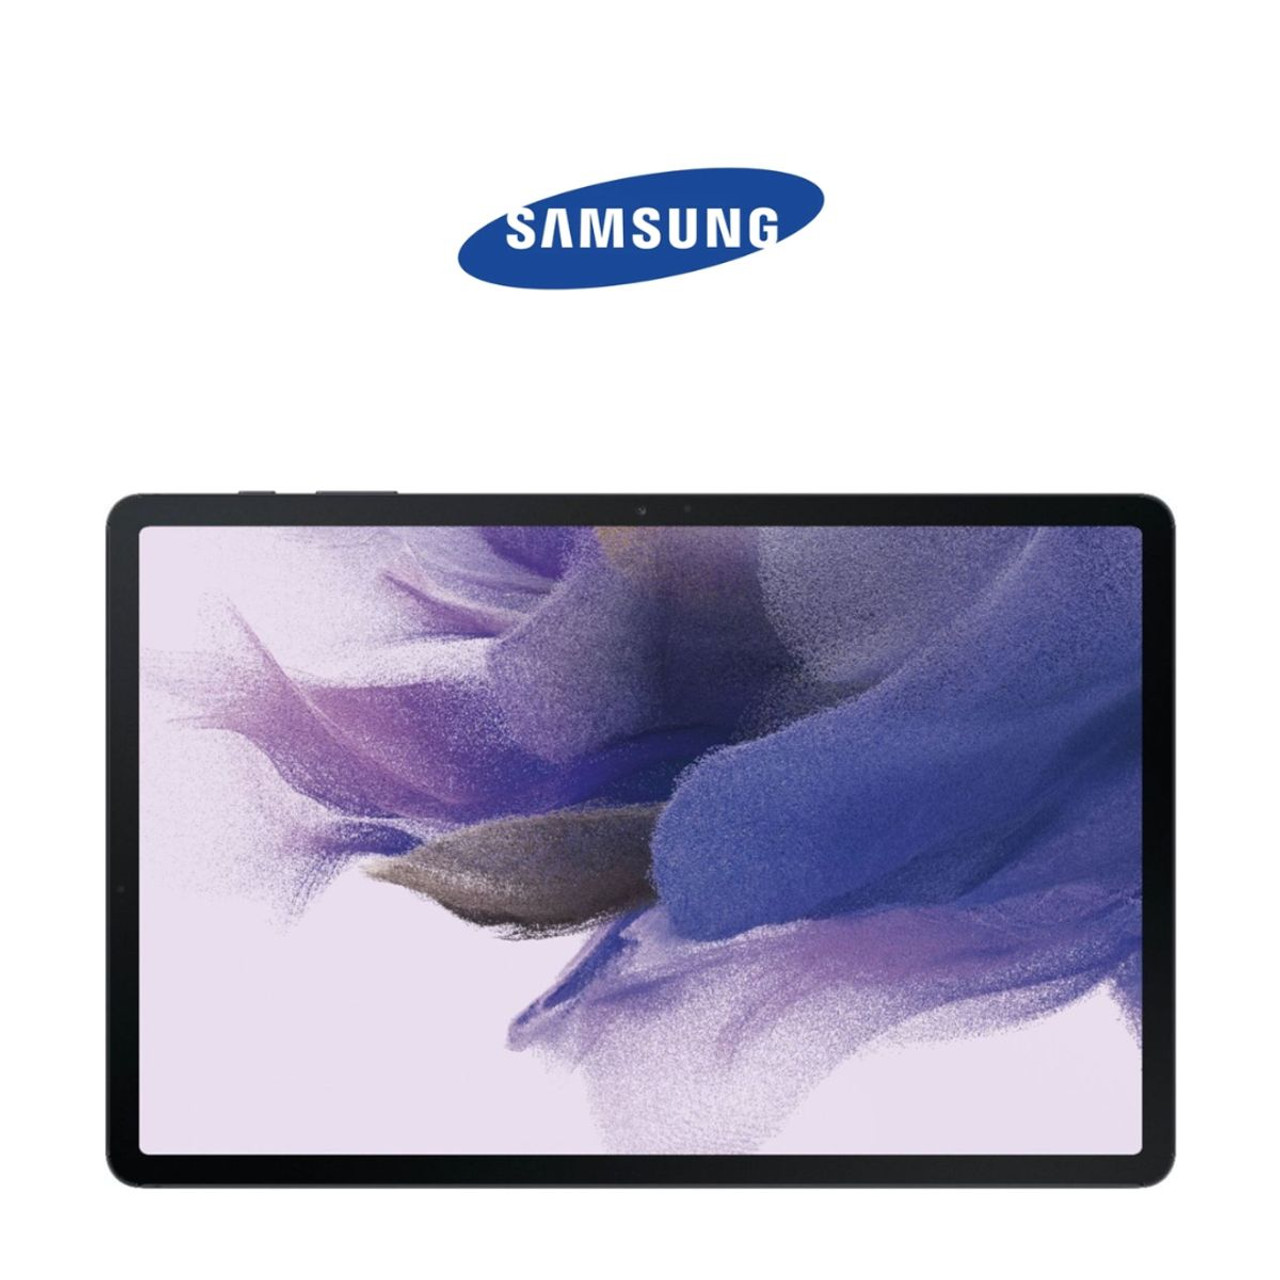 Samsung Galaxy Tab S7 FE 5G - 64GB product image